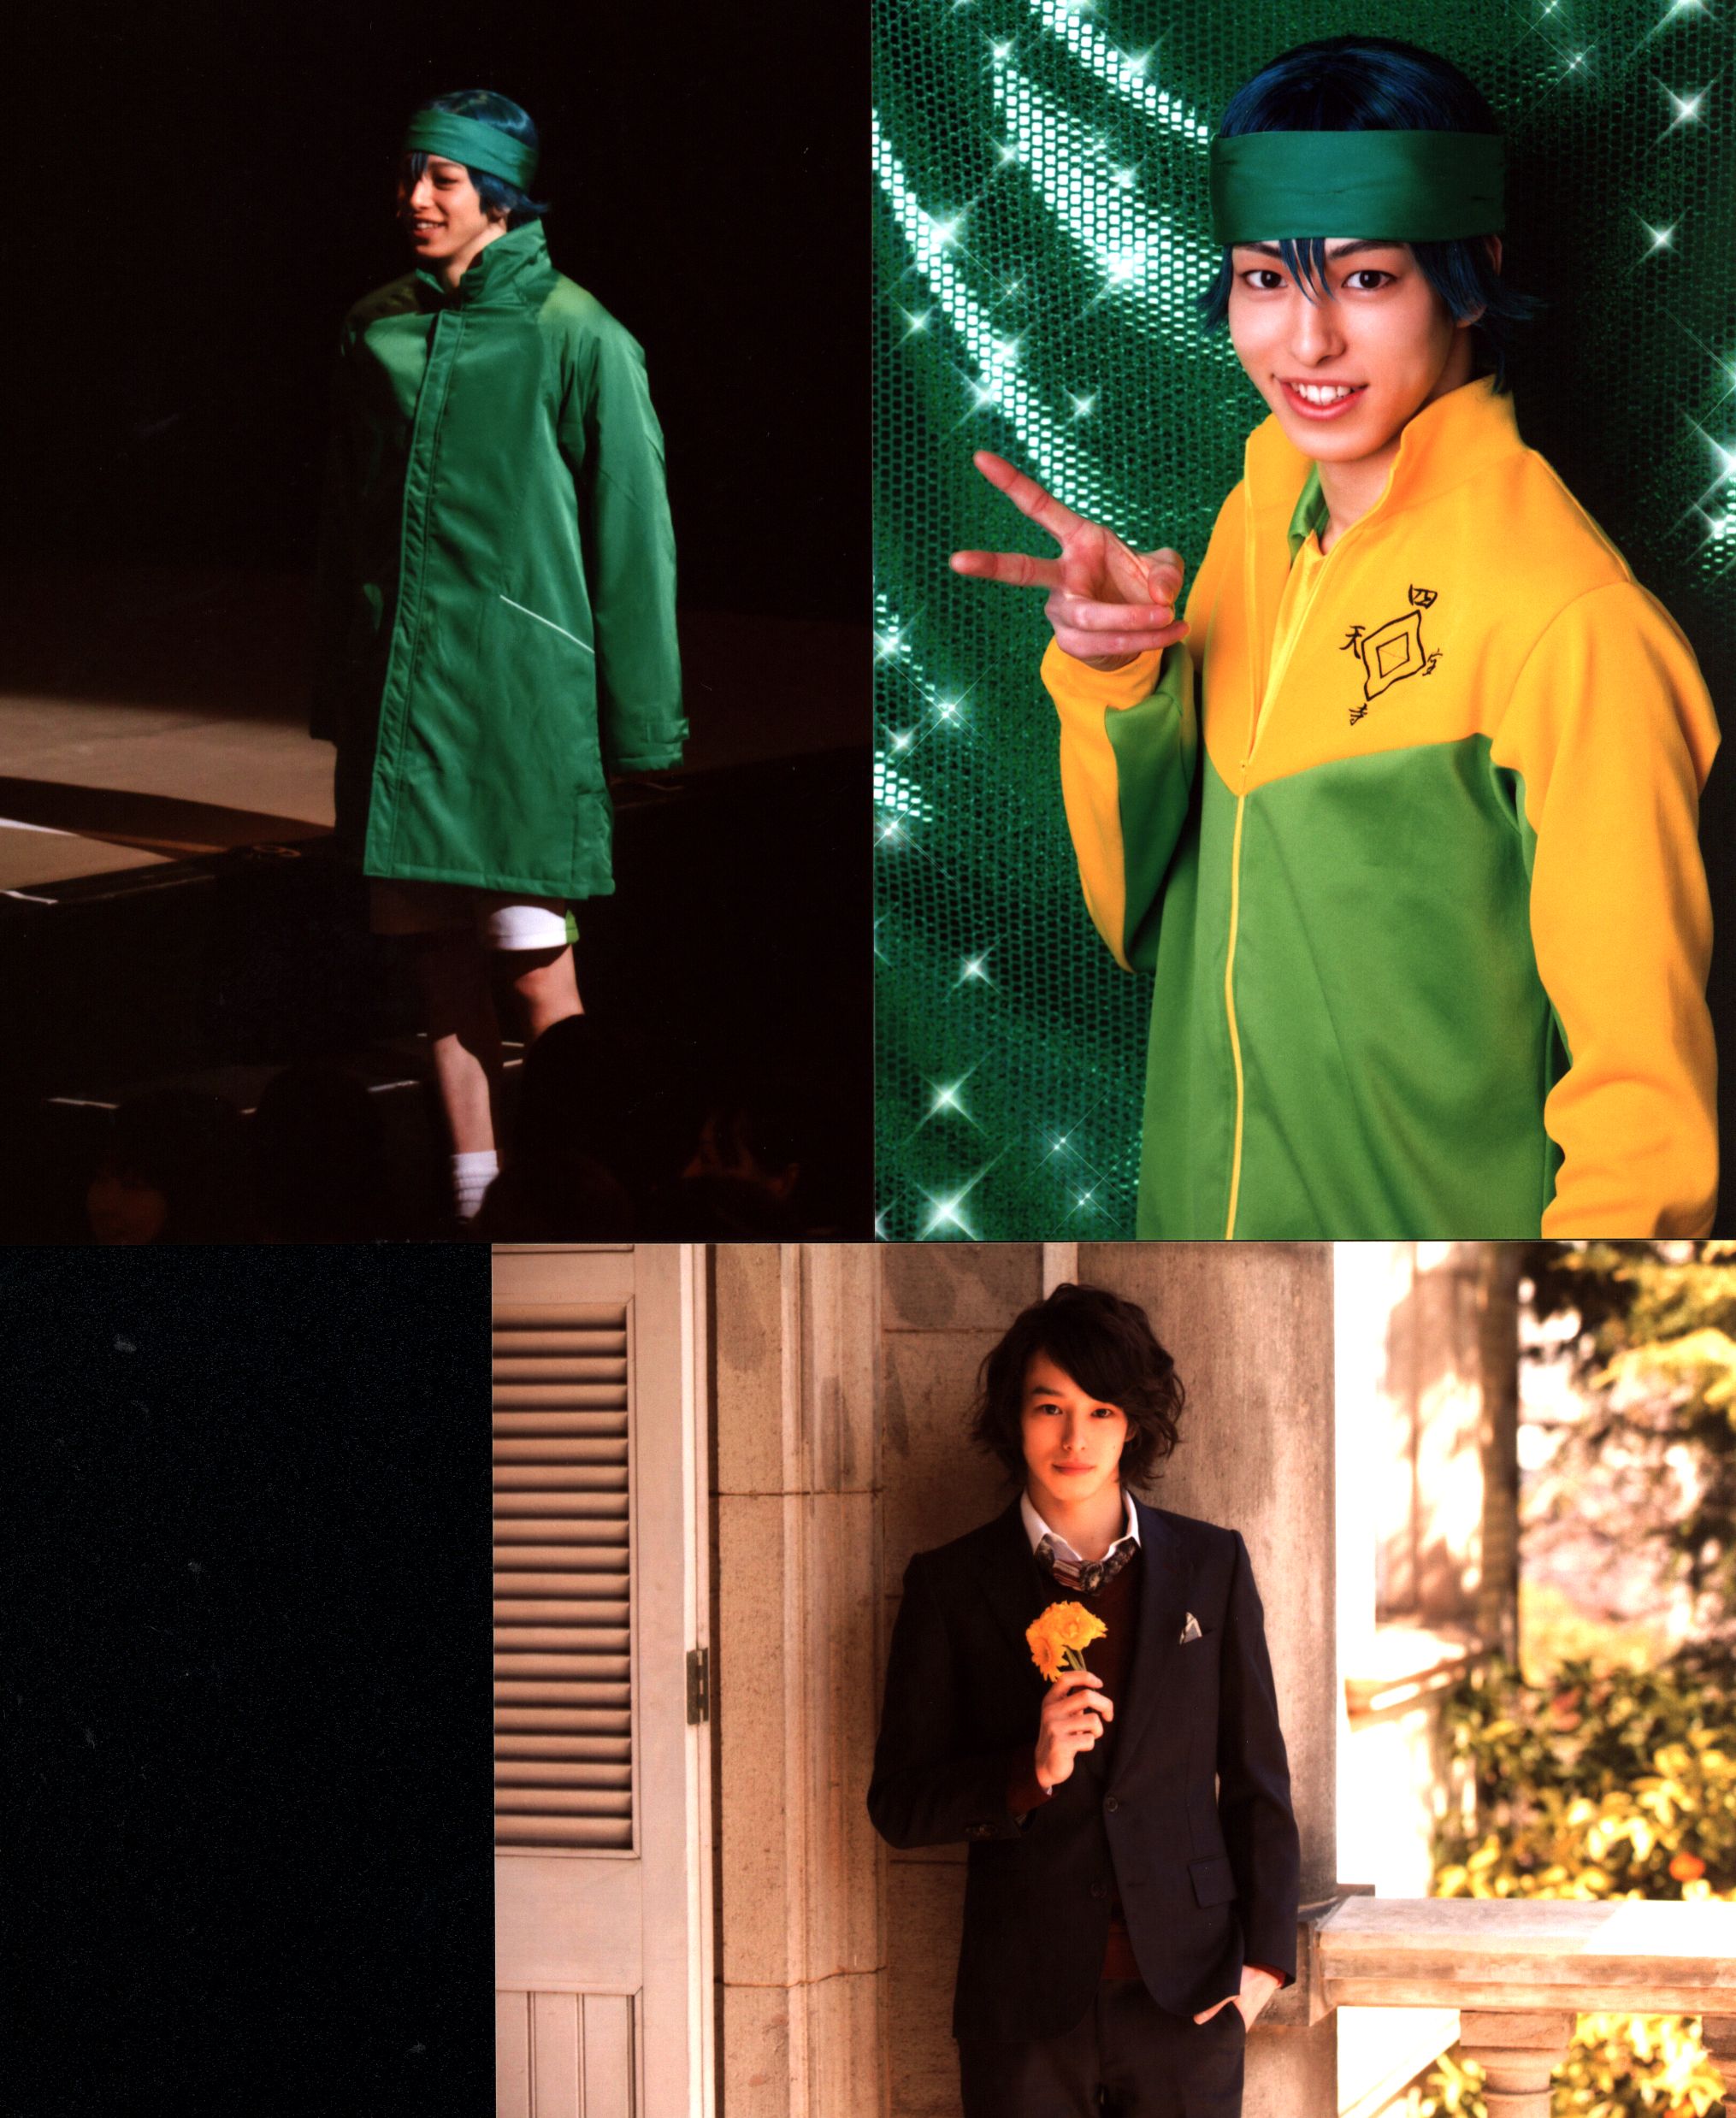 Musical Prince Of Tennis Dream Live 14 Hajime Yuji Sugie Ambition Mandarake Online Shop